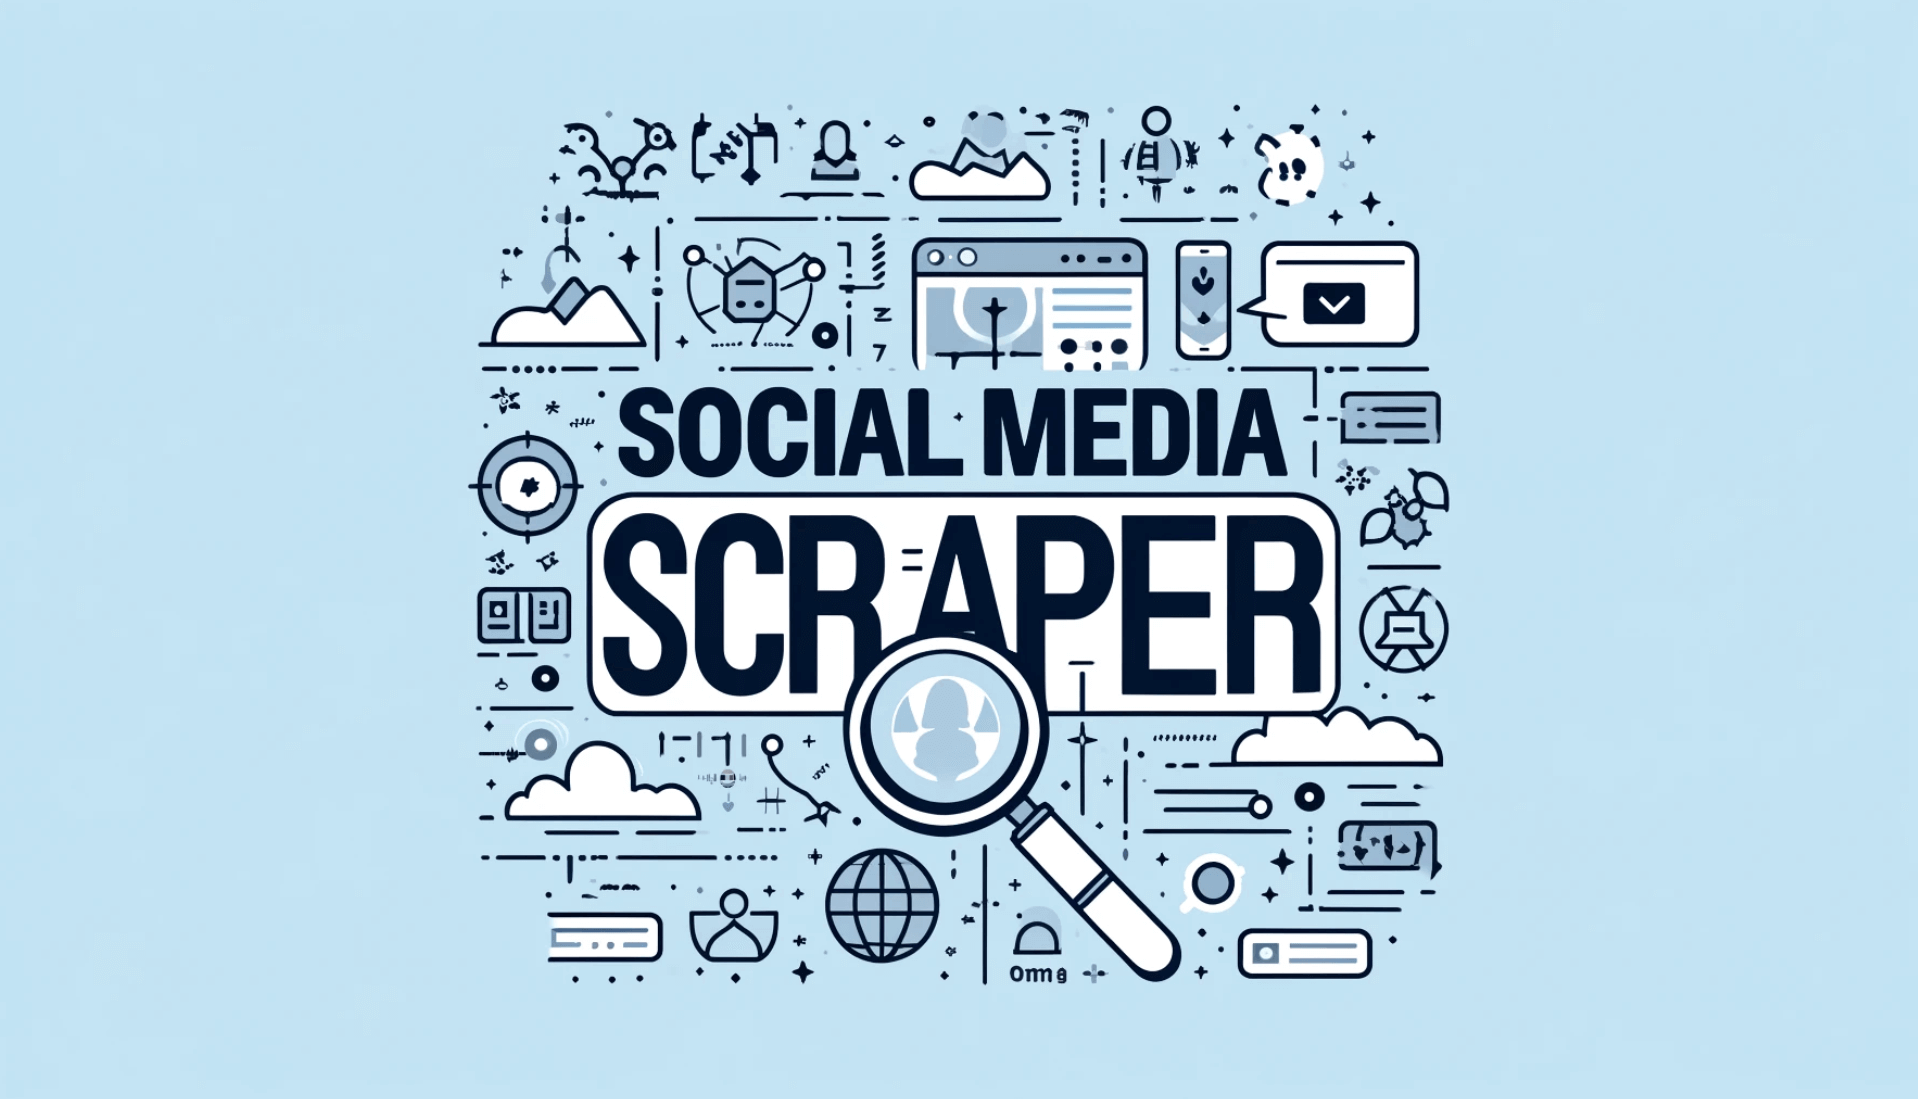 Social Media Scraper